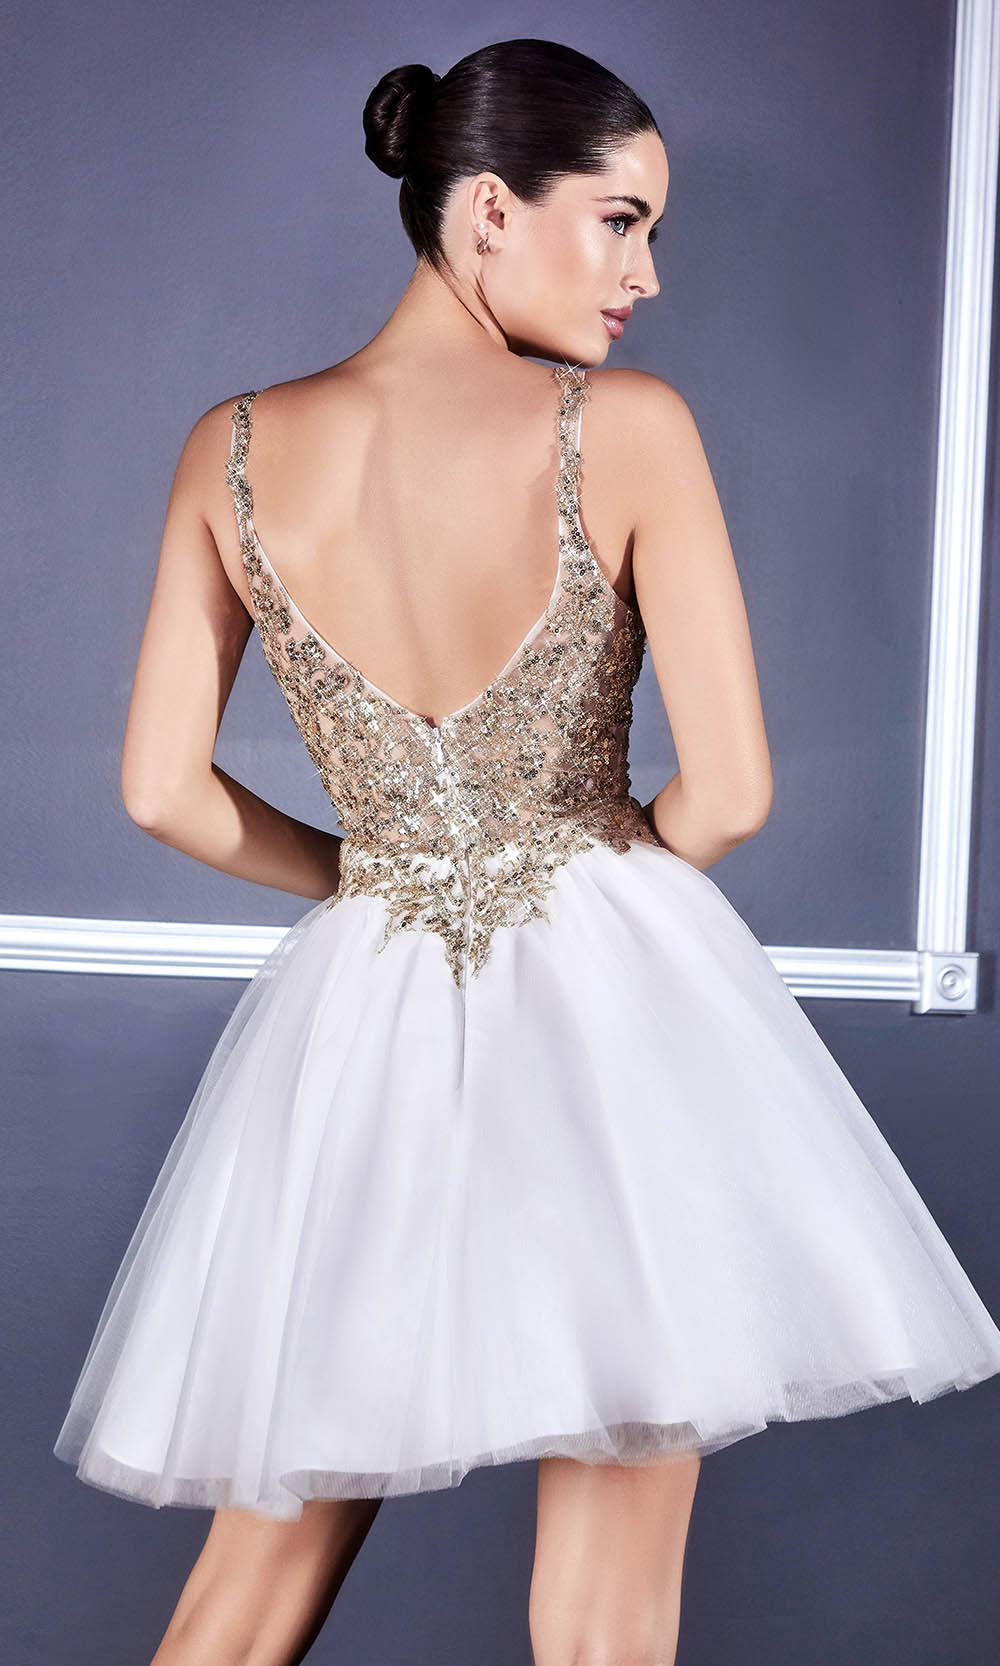 Cinderella Divine - 9239 Metallic Appliqued Fit And Flare Short Dress In White and Ivorygrade 8 grad dresses, graduation dresses